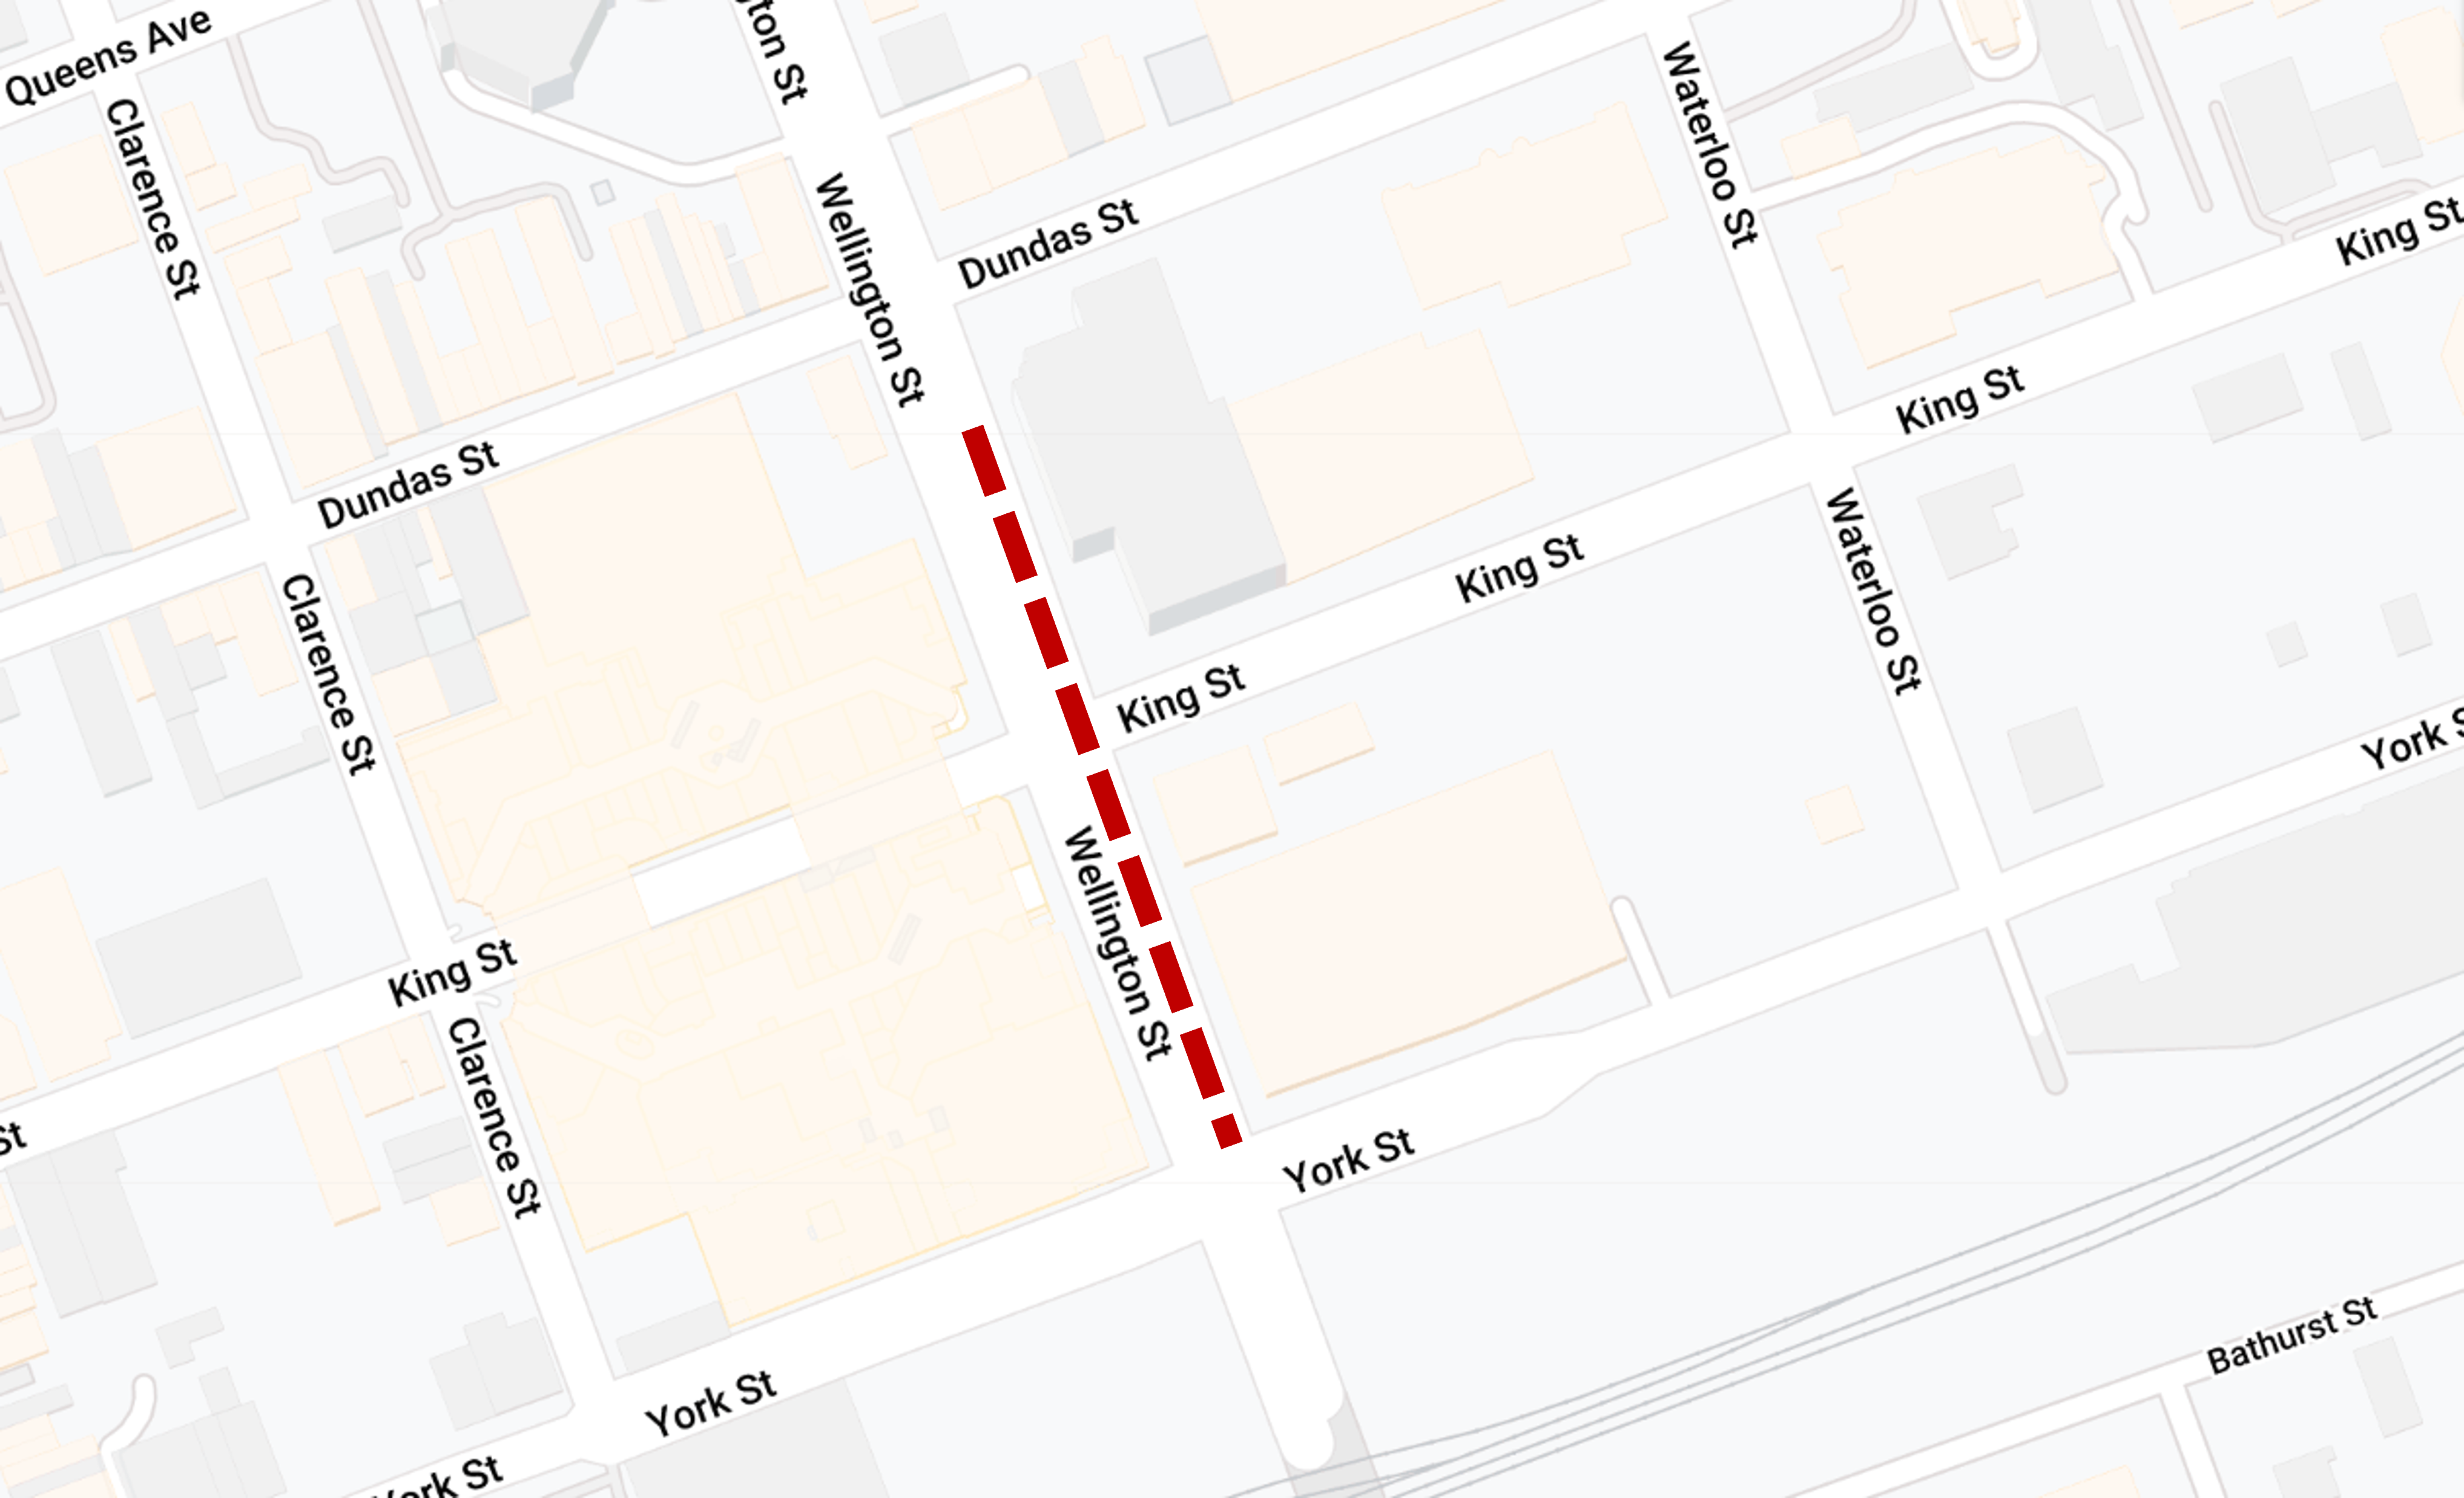 Lane restrictions on Wellington Street between York and Dundas Streets